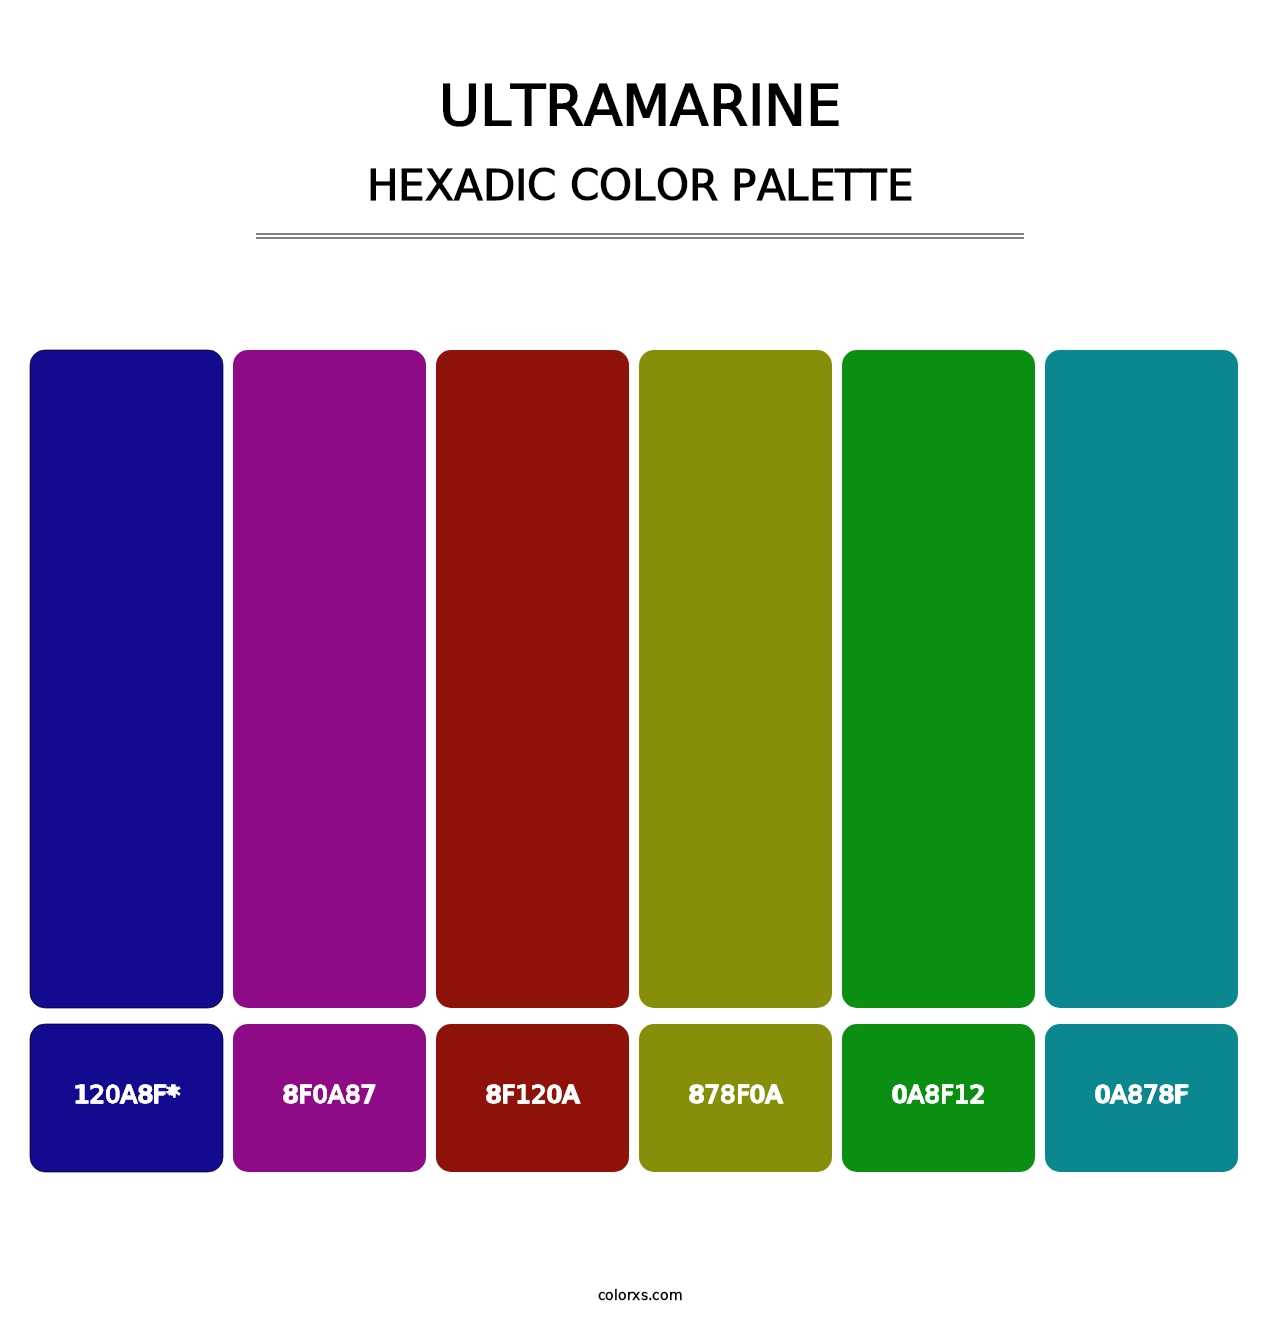 Ultramarine - Hexadic Color Palette